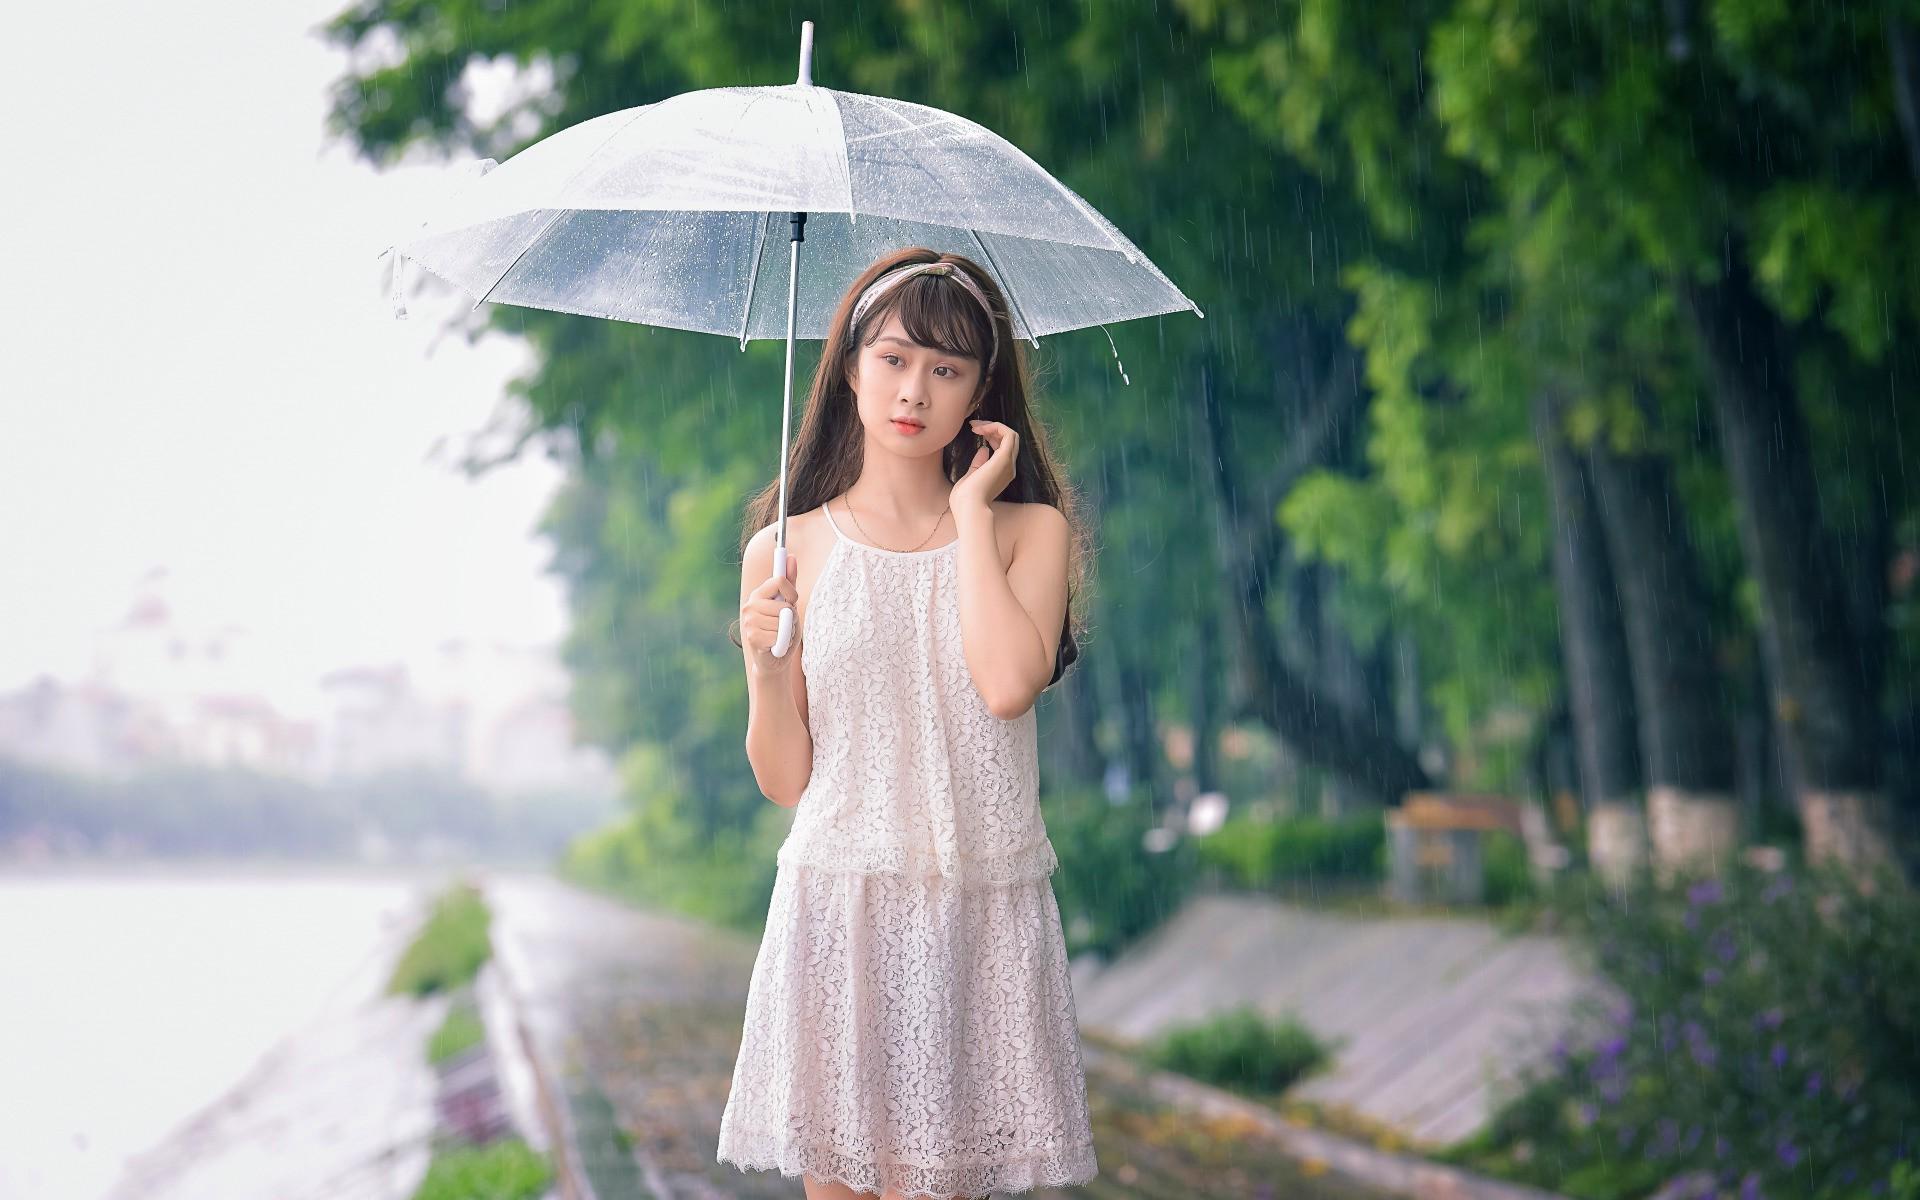 Free photo: Beauty with Umbrella, Woman, Portrait